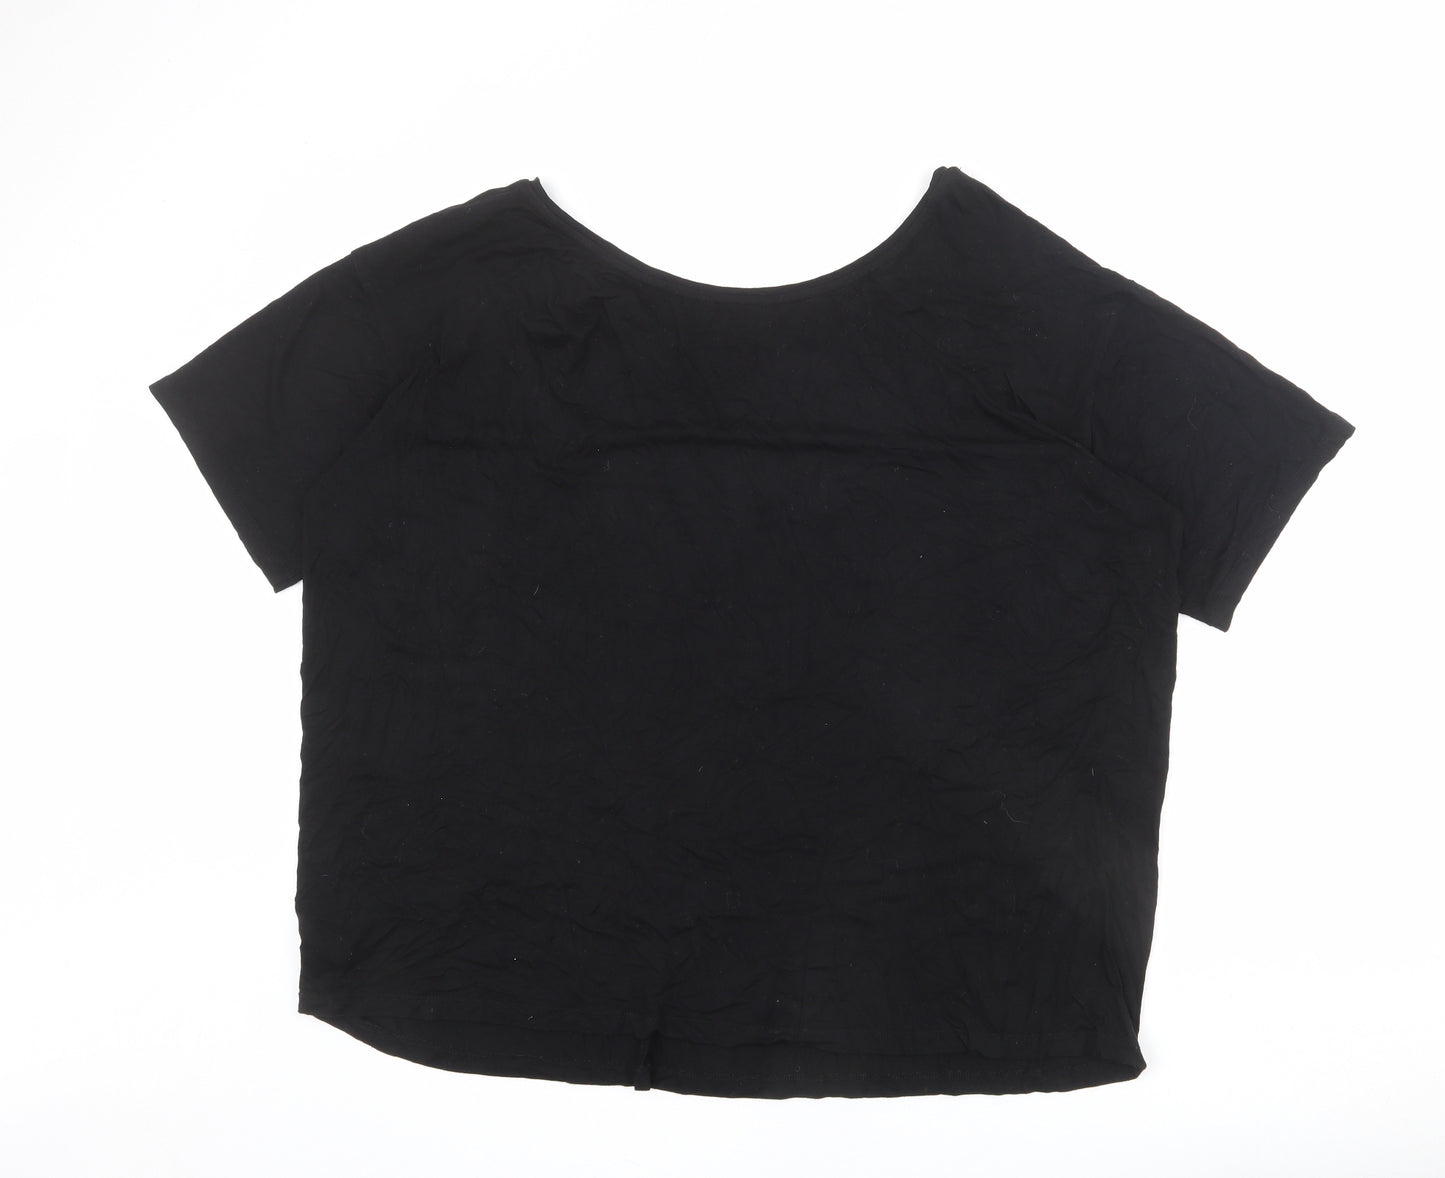 NEXT Womens Black Viscose Basic T-Shirt Size 20 V-Neck - Sequin Details